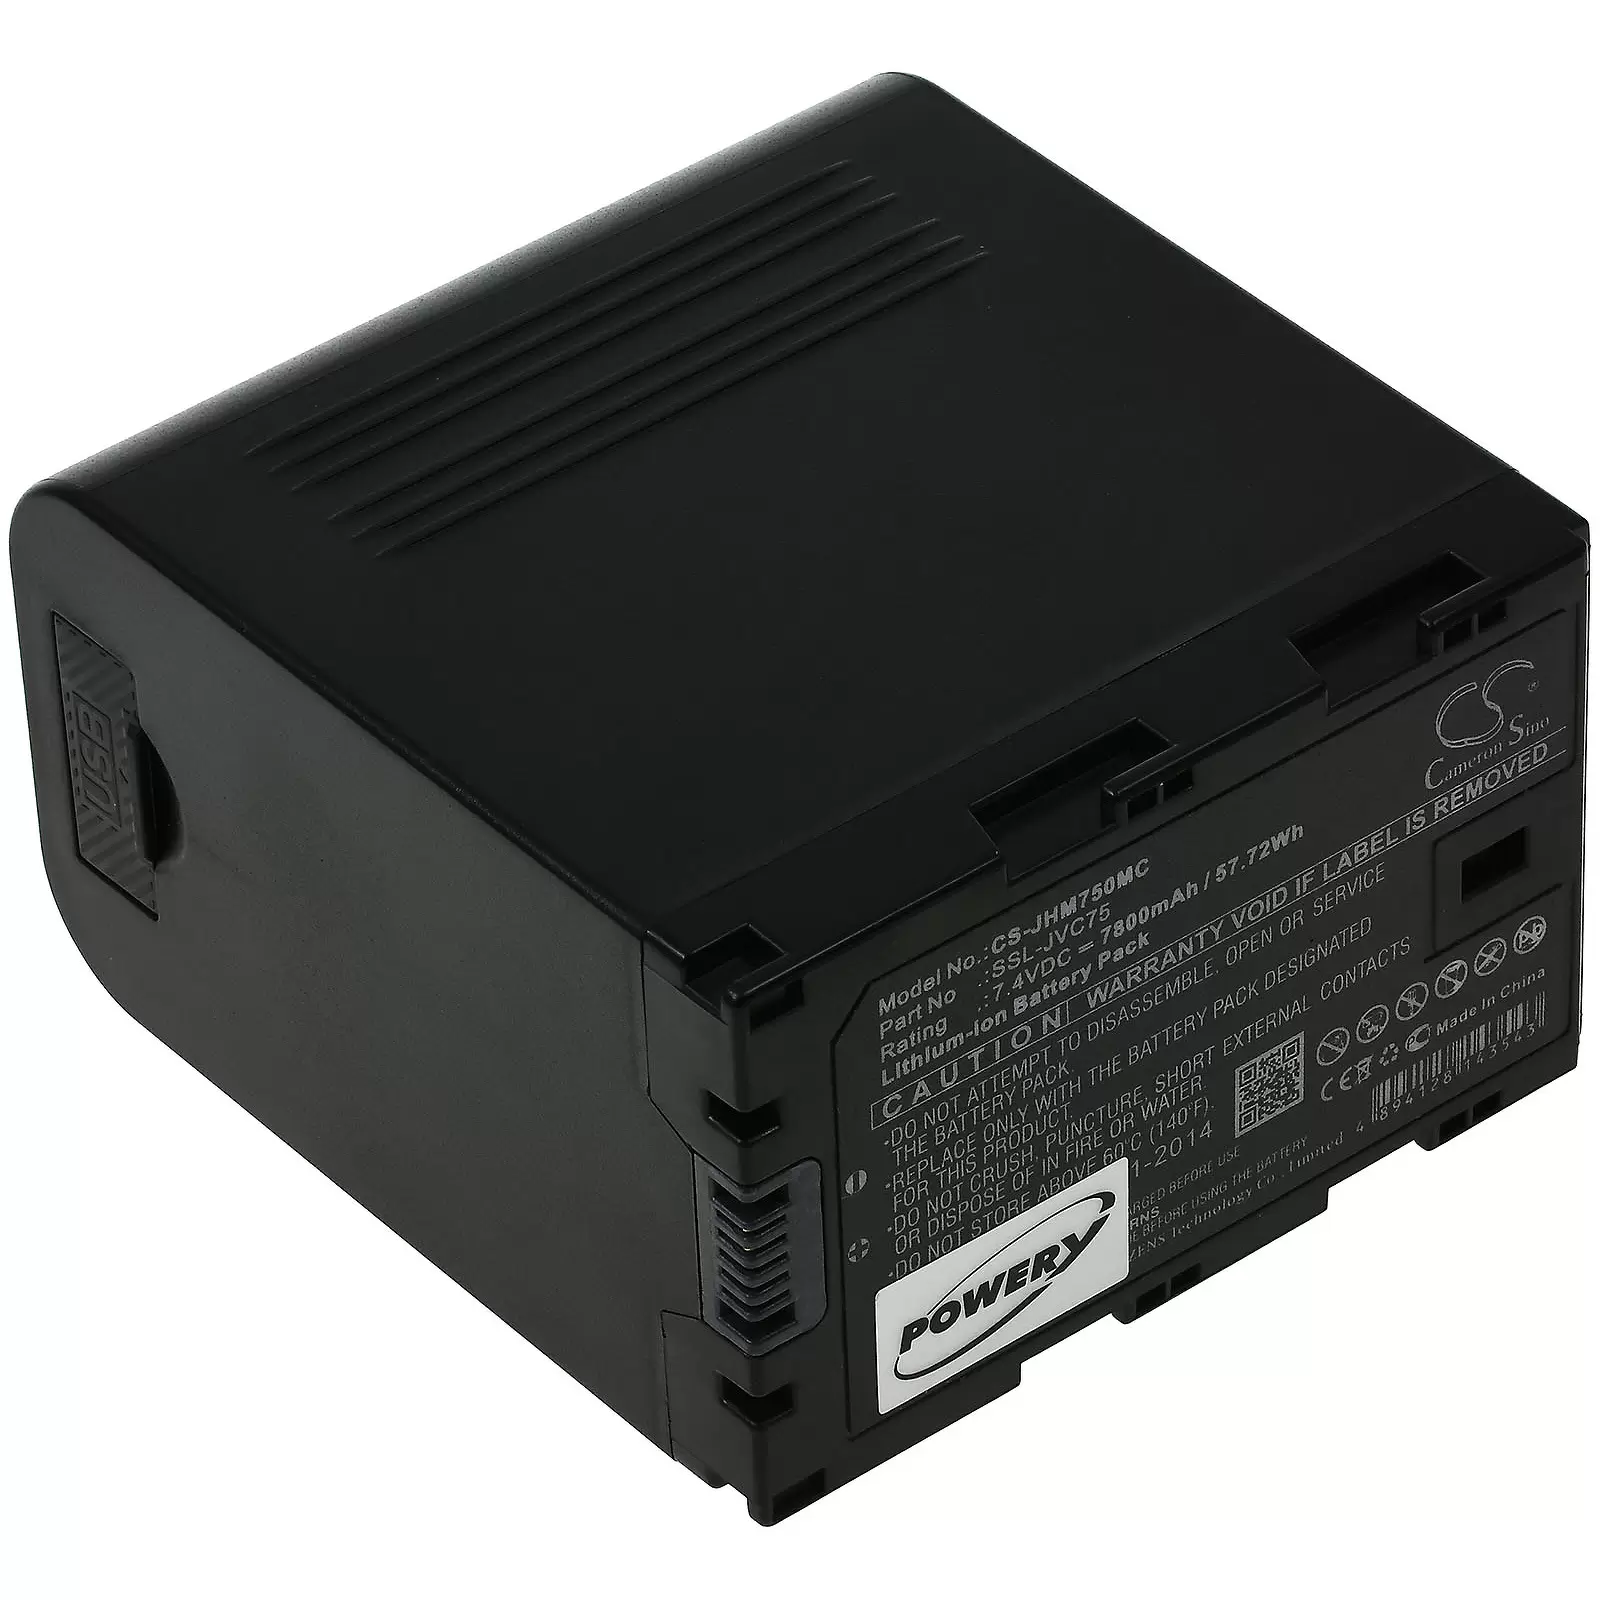 Powerakku für Profi-Videokamera JVC GY-HM200 / Typ SSL-JVC75 mit USB